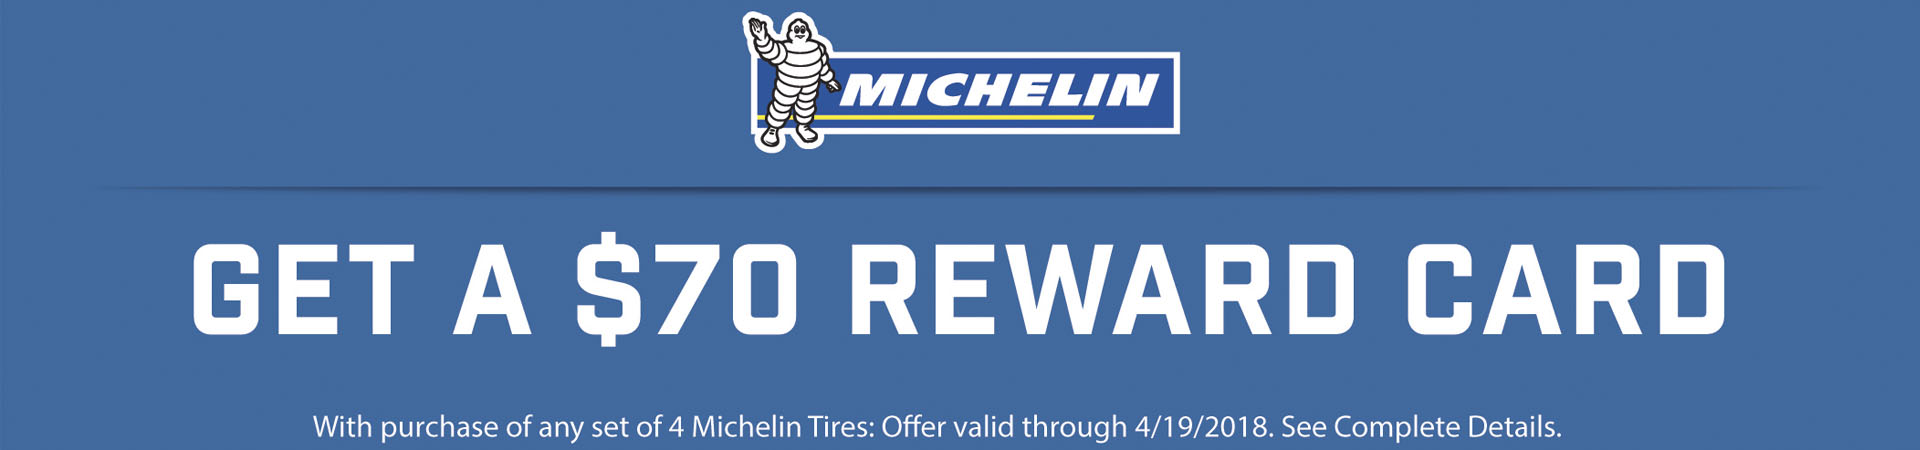 michelin-70-spring-reward-card-belle-tire